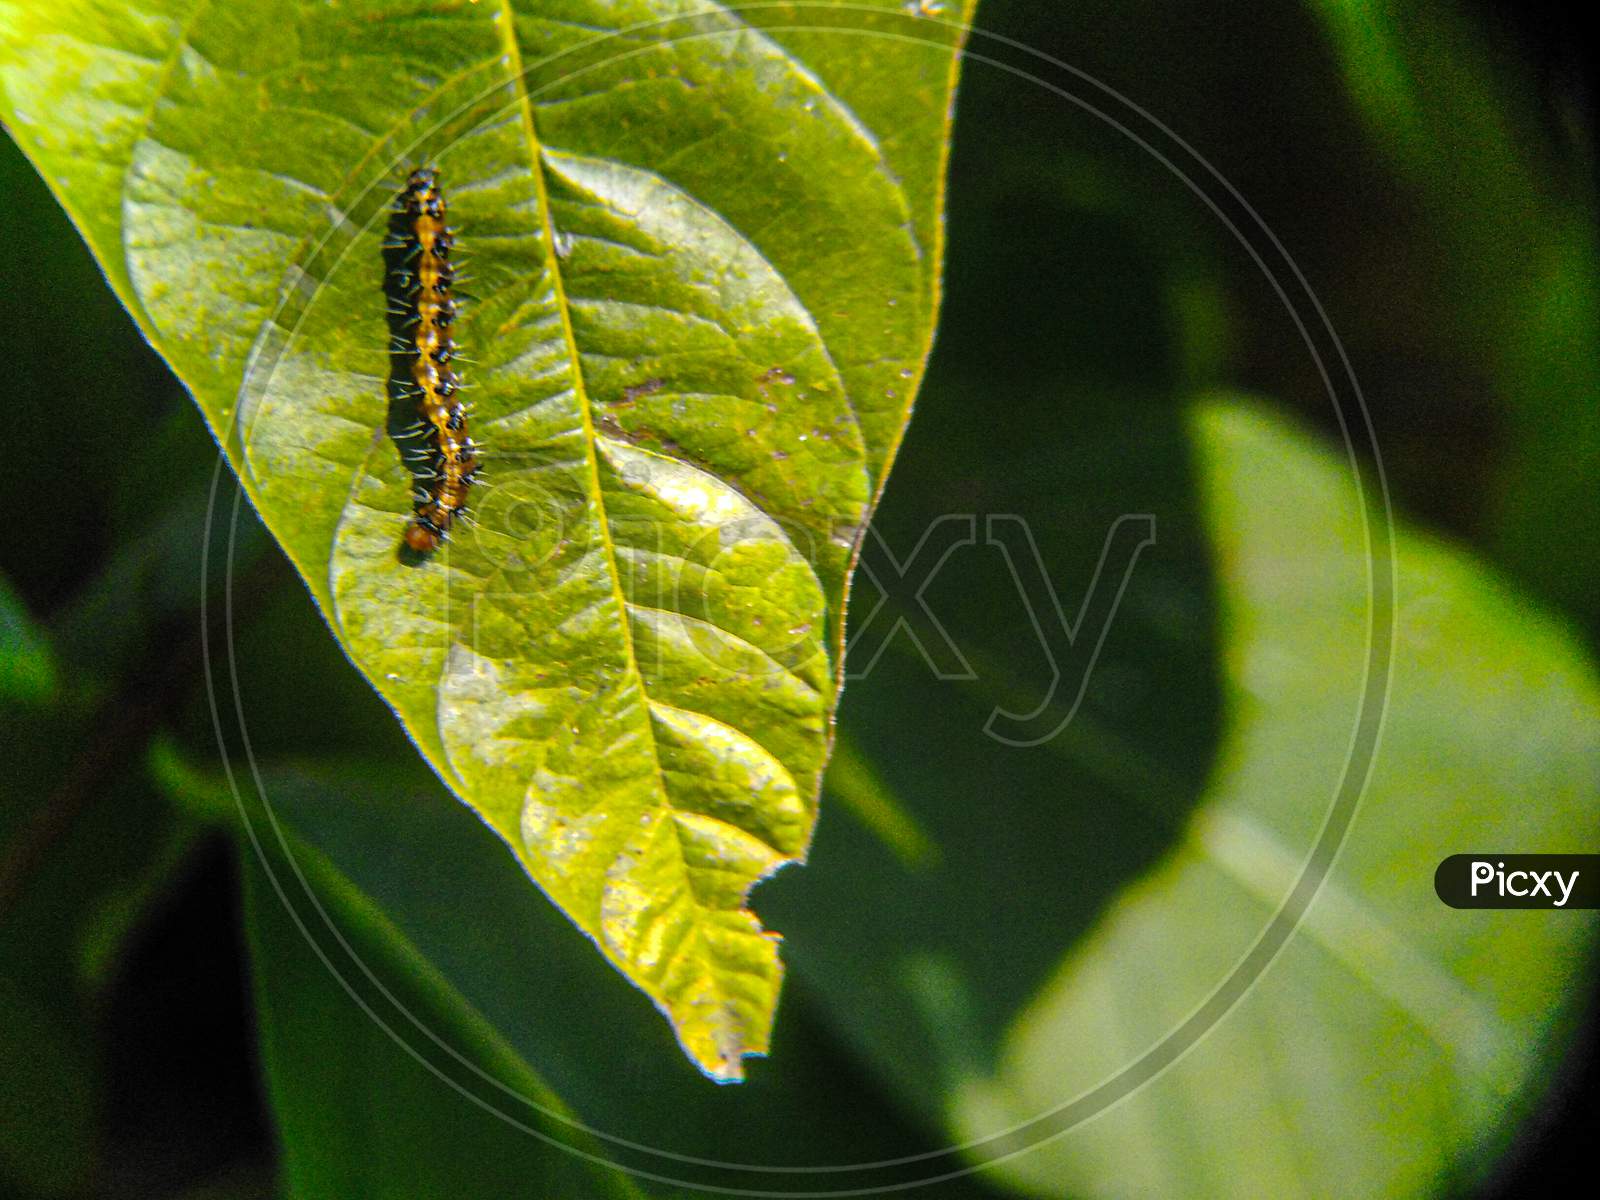 Caterpillar micro animal view